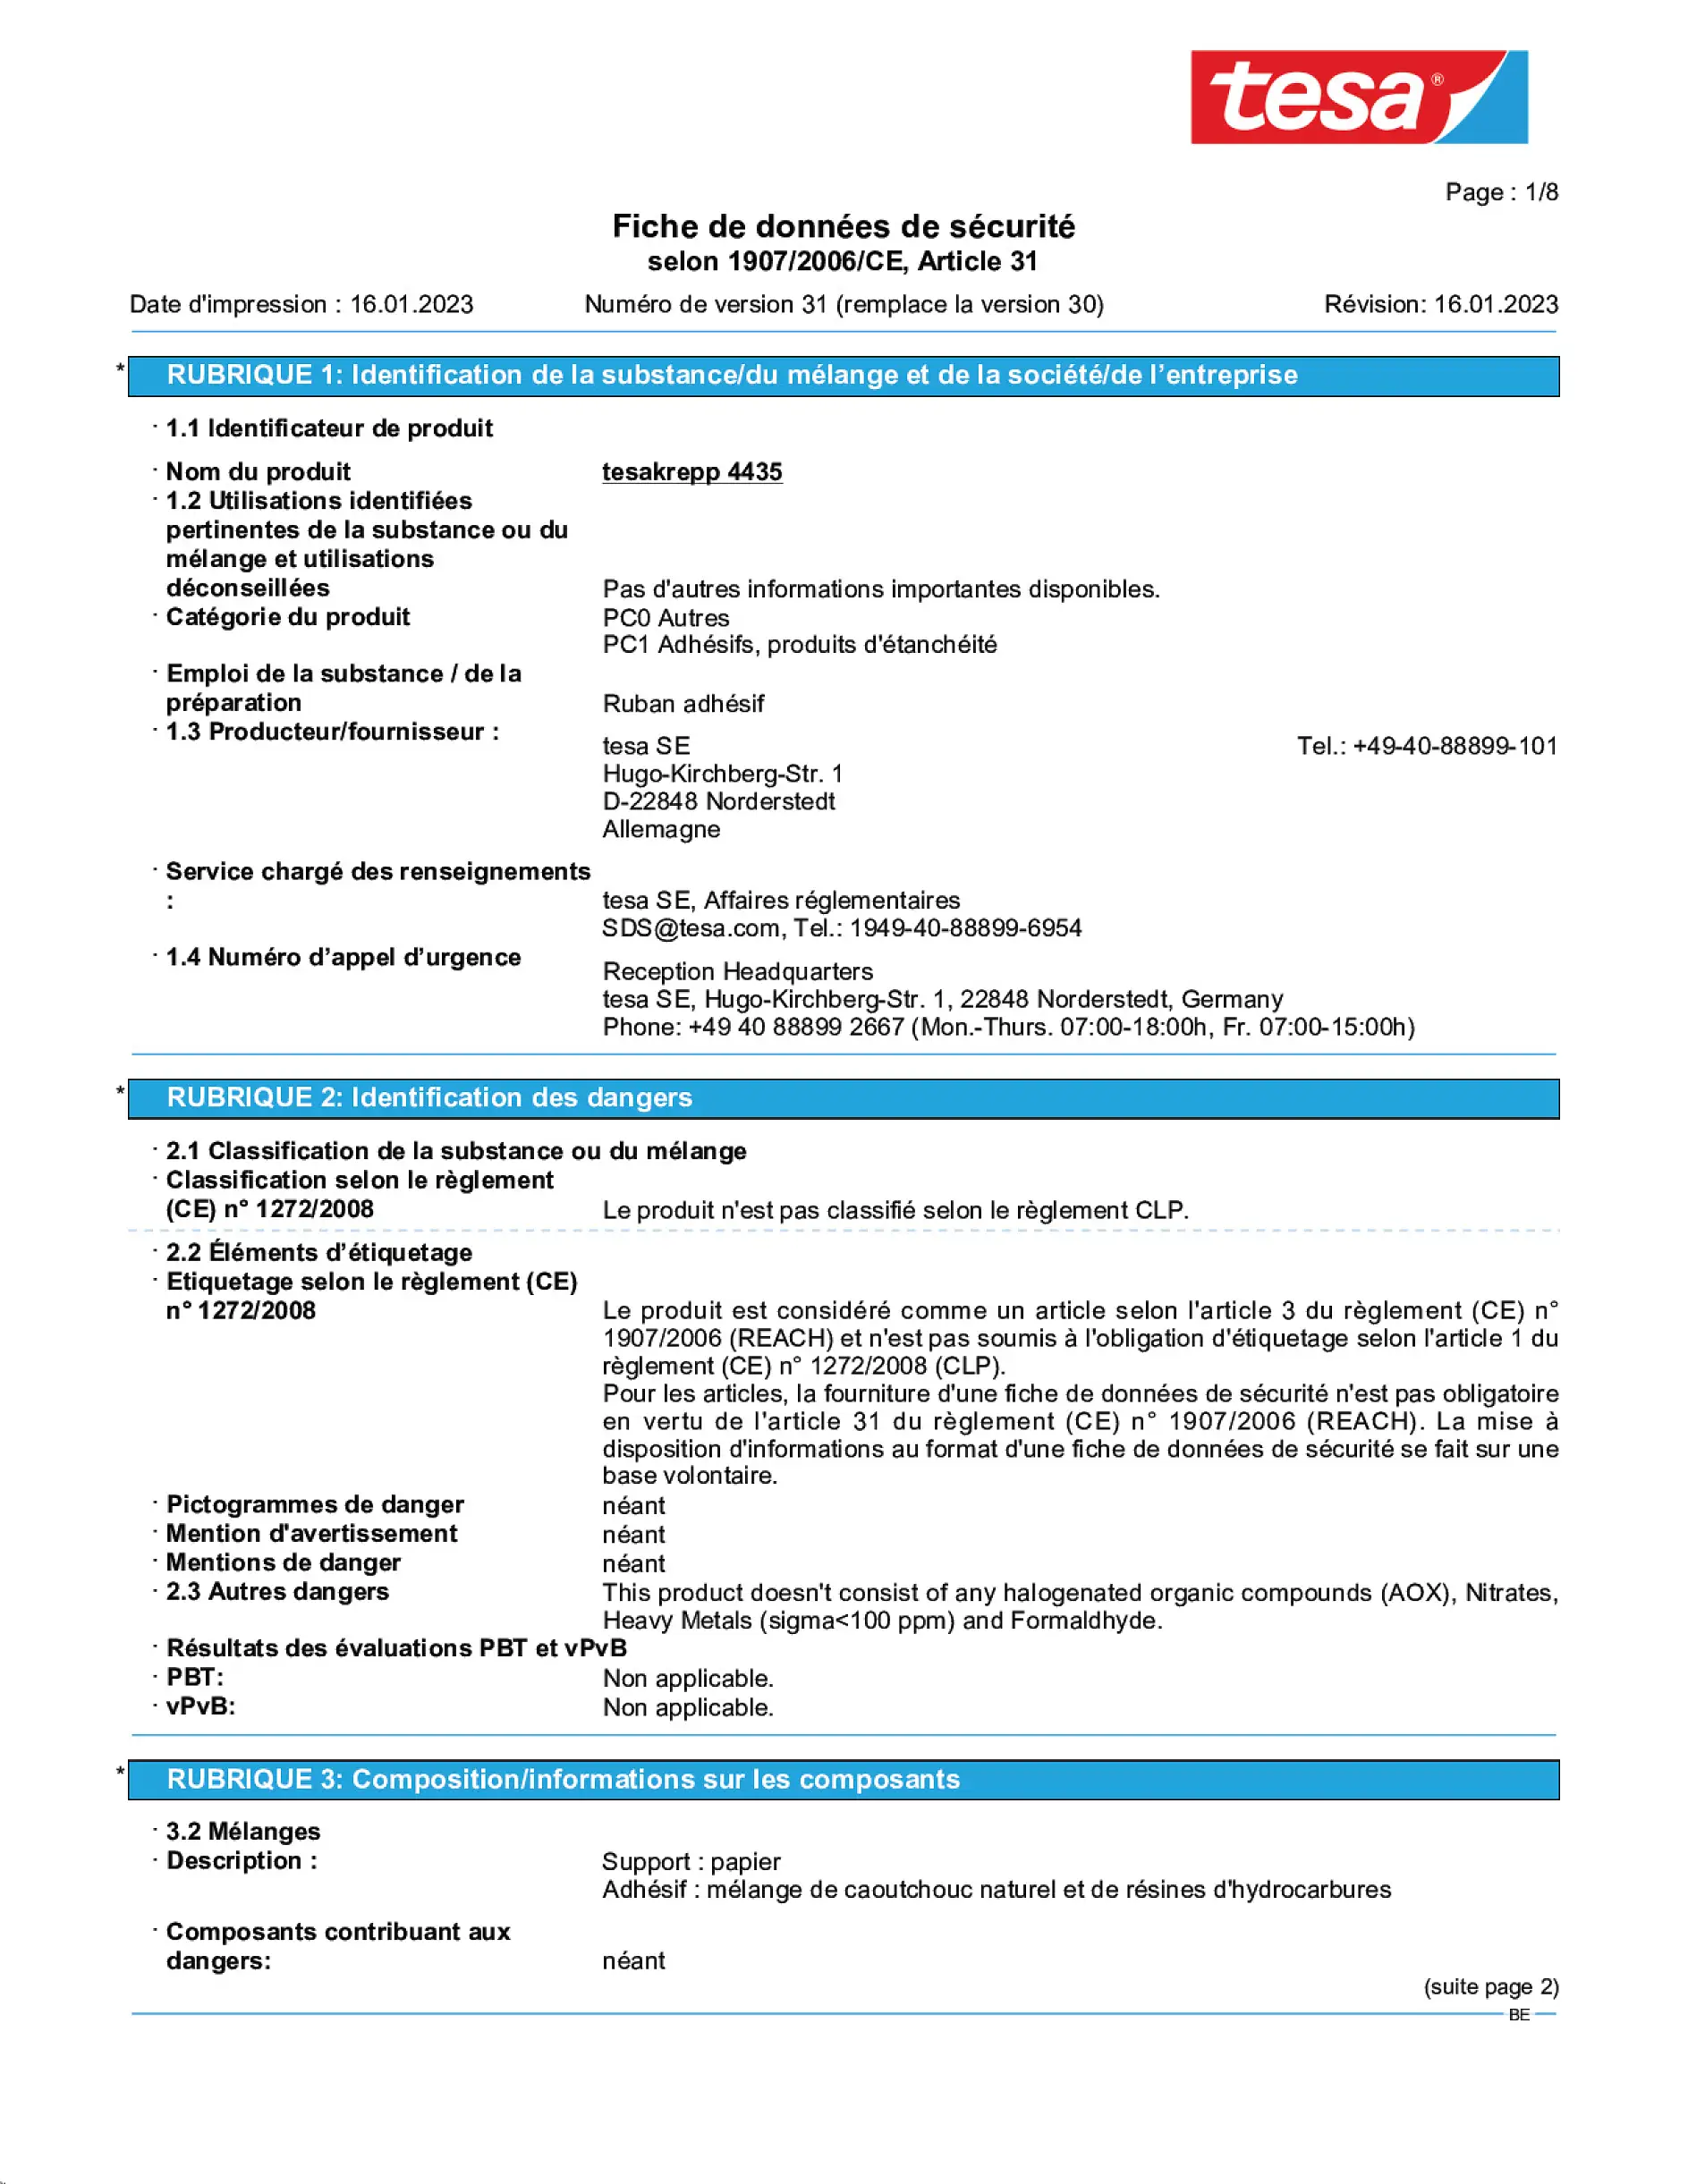 Safety data sheet_tesa® Professional 04435_nl-BE_v31